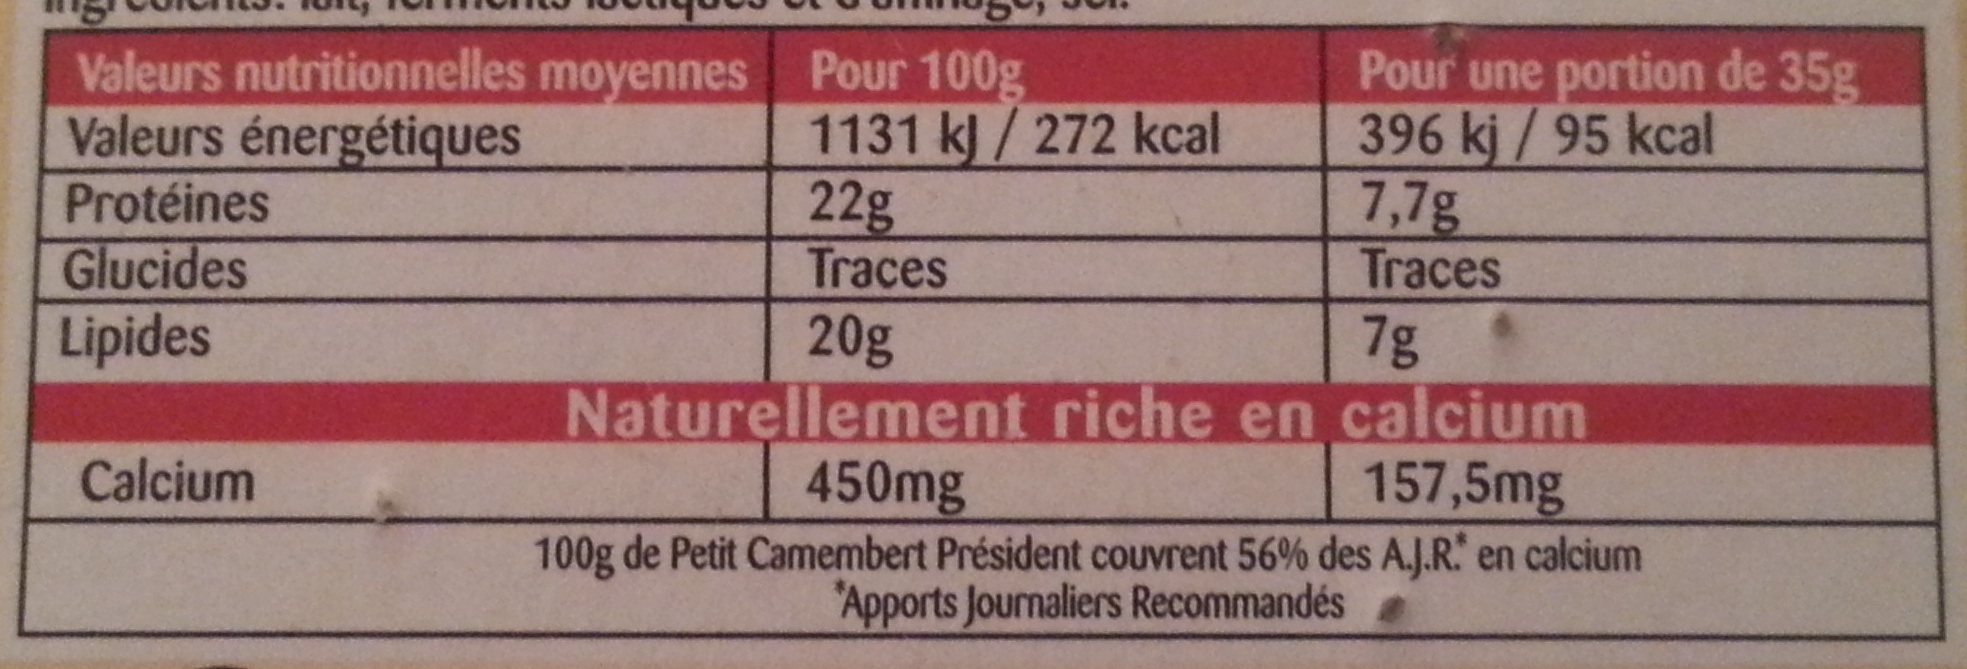 Petit camembert - Informació nutricional - fr